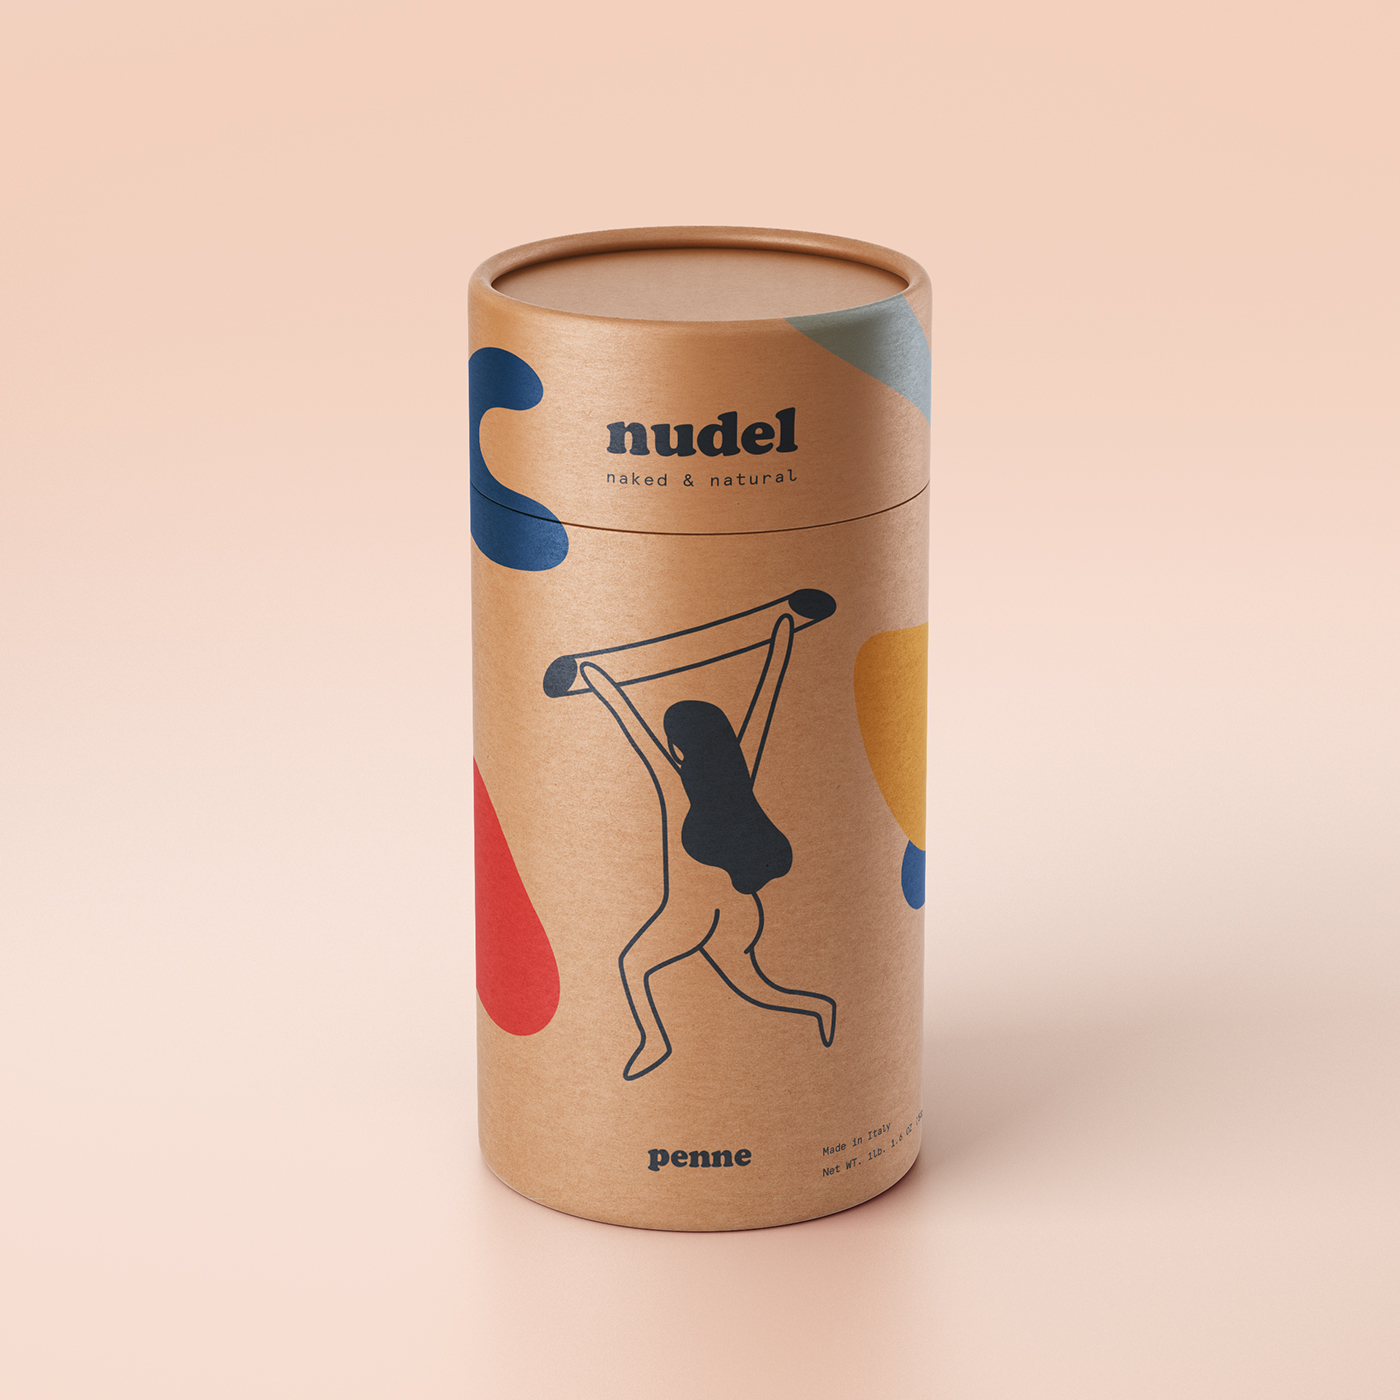 nudel naked natural noodles Brand Development people spices Pasta Food Packaging adobeawards